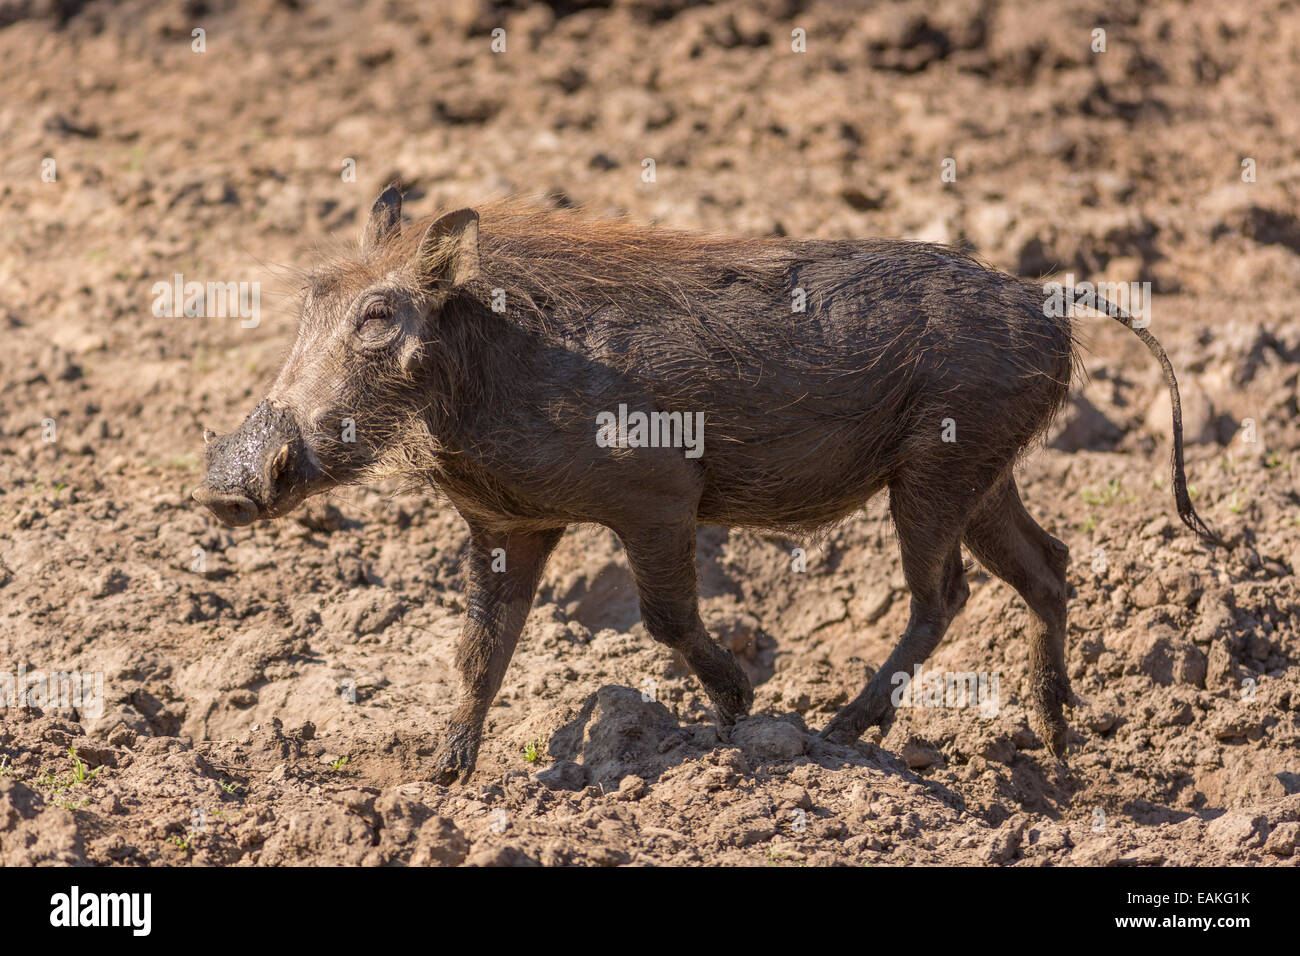 SOUTH AFRICA - warthog Stock Photo